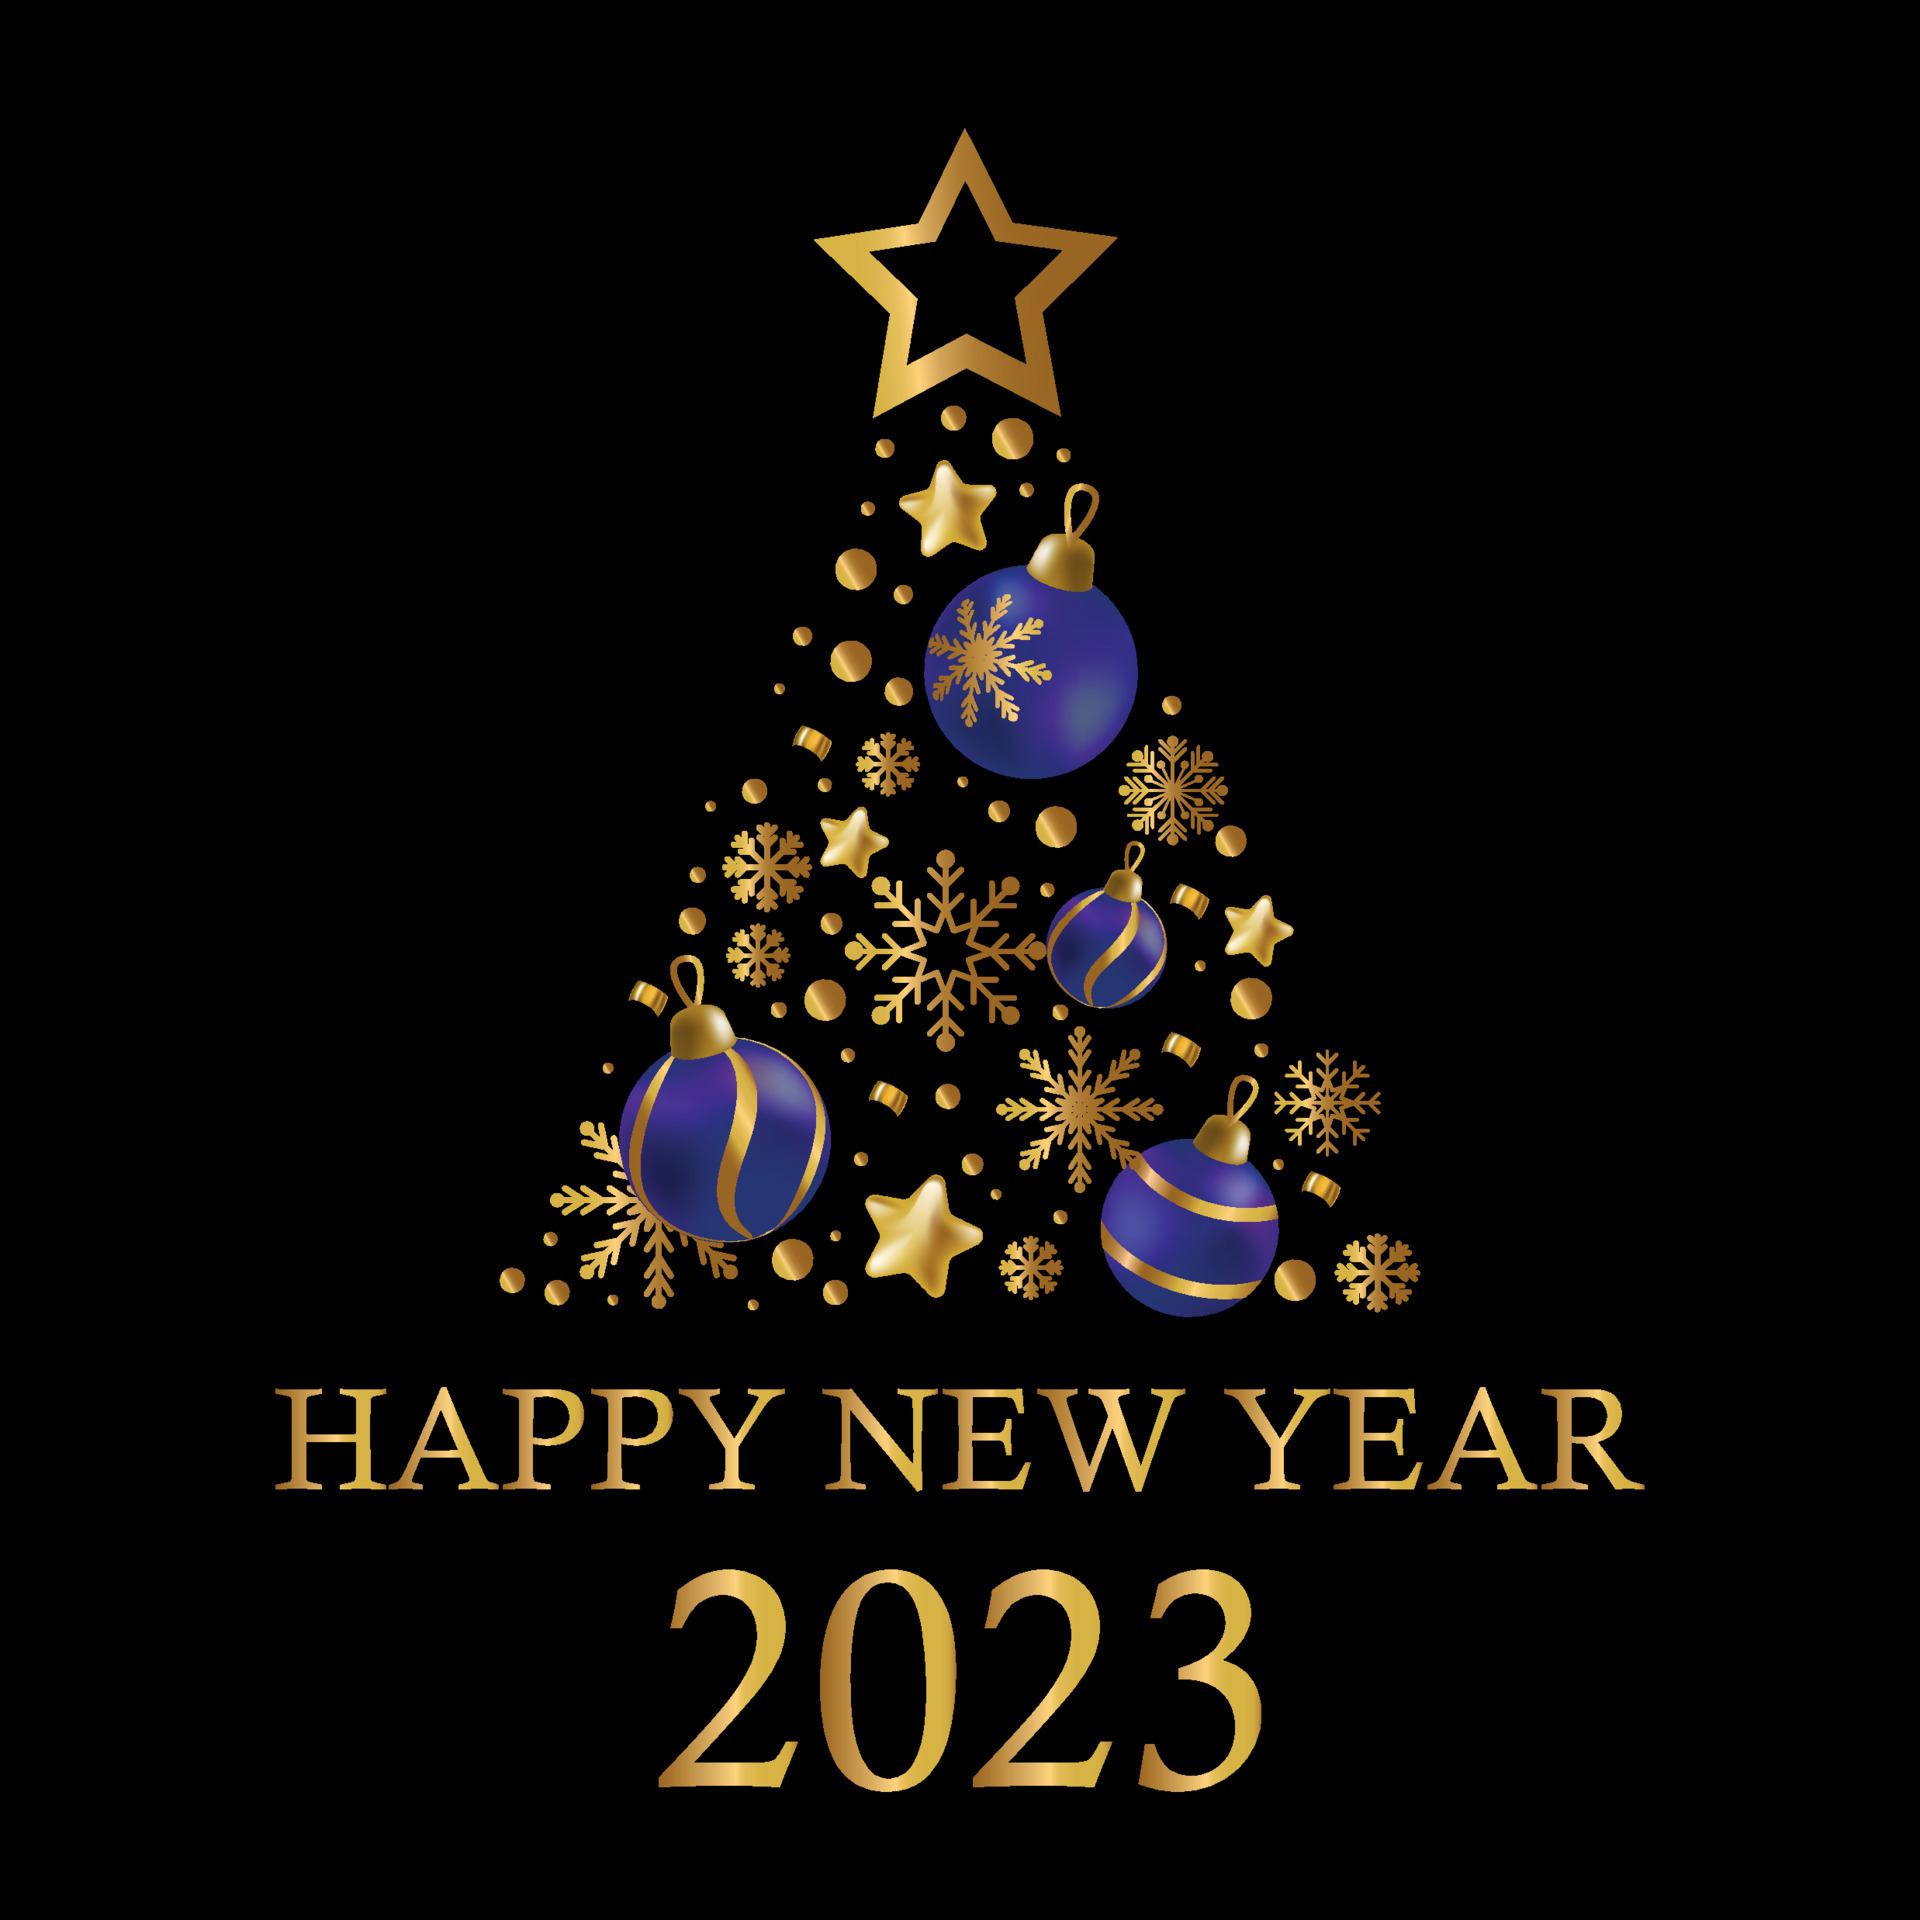 árvore de natal feita de elementos de férias nas cores azul e dourado, 2023  - vetor 12992705 Vetor no Vecteezy